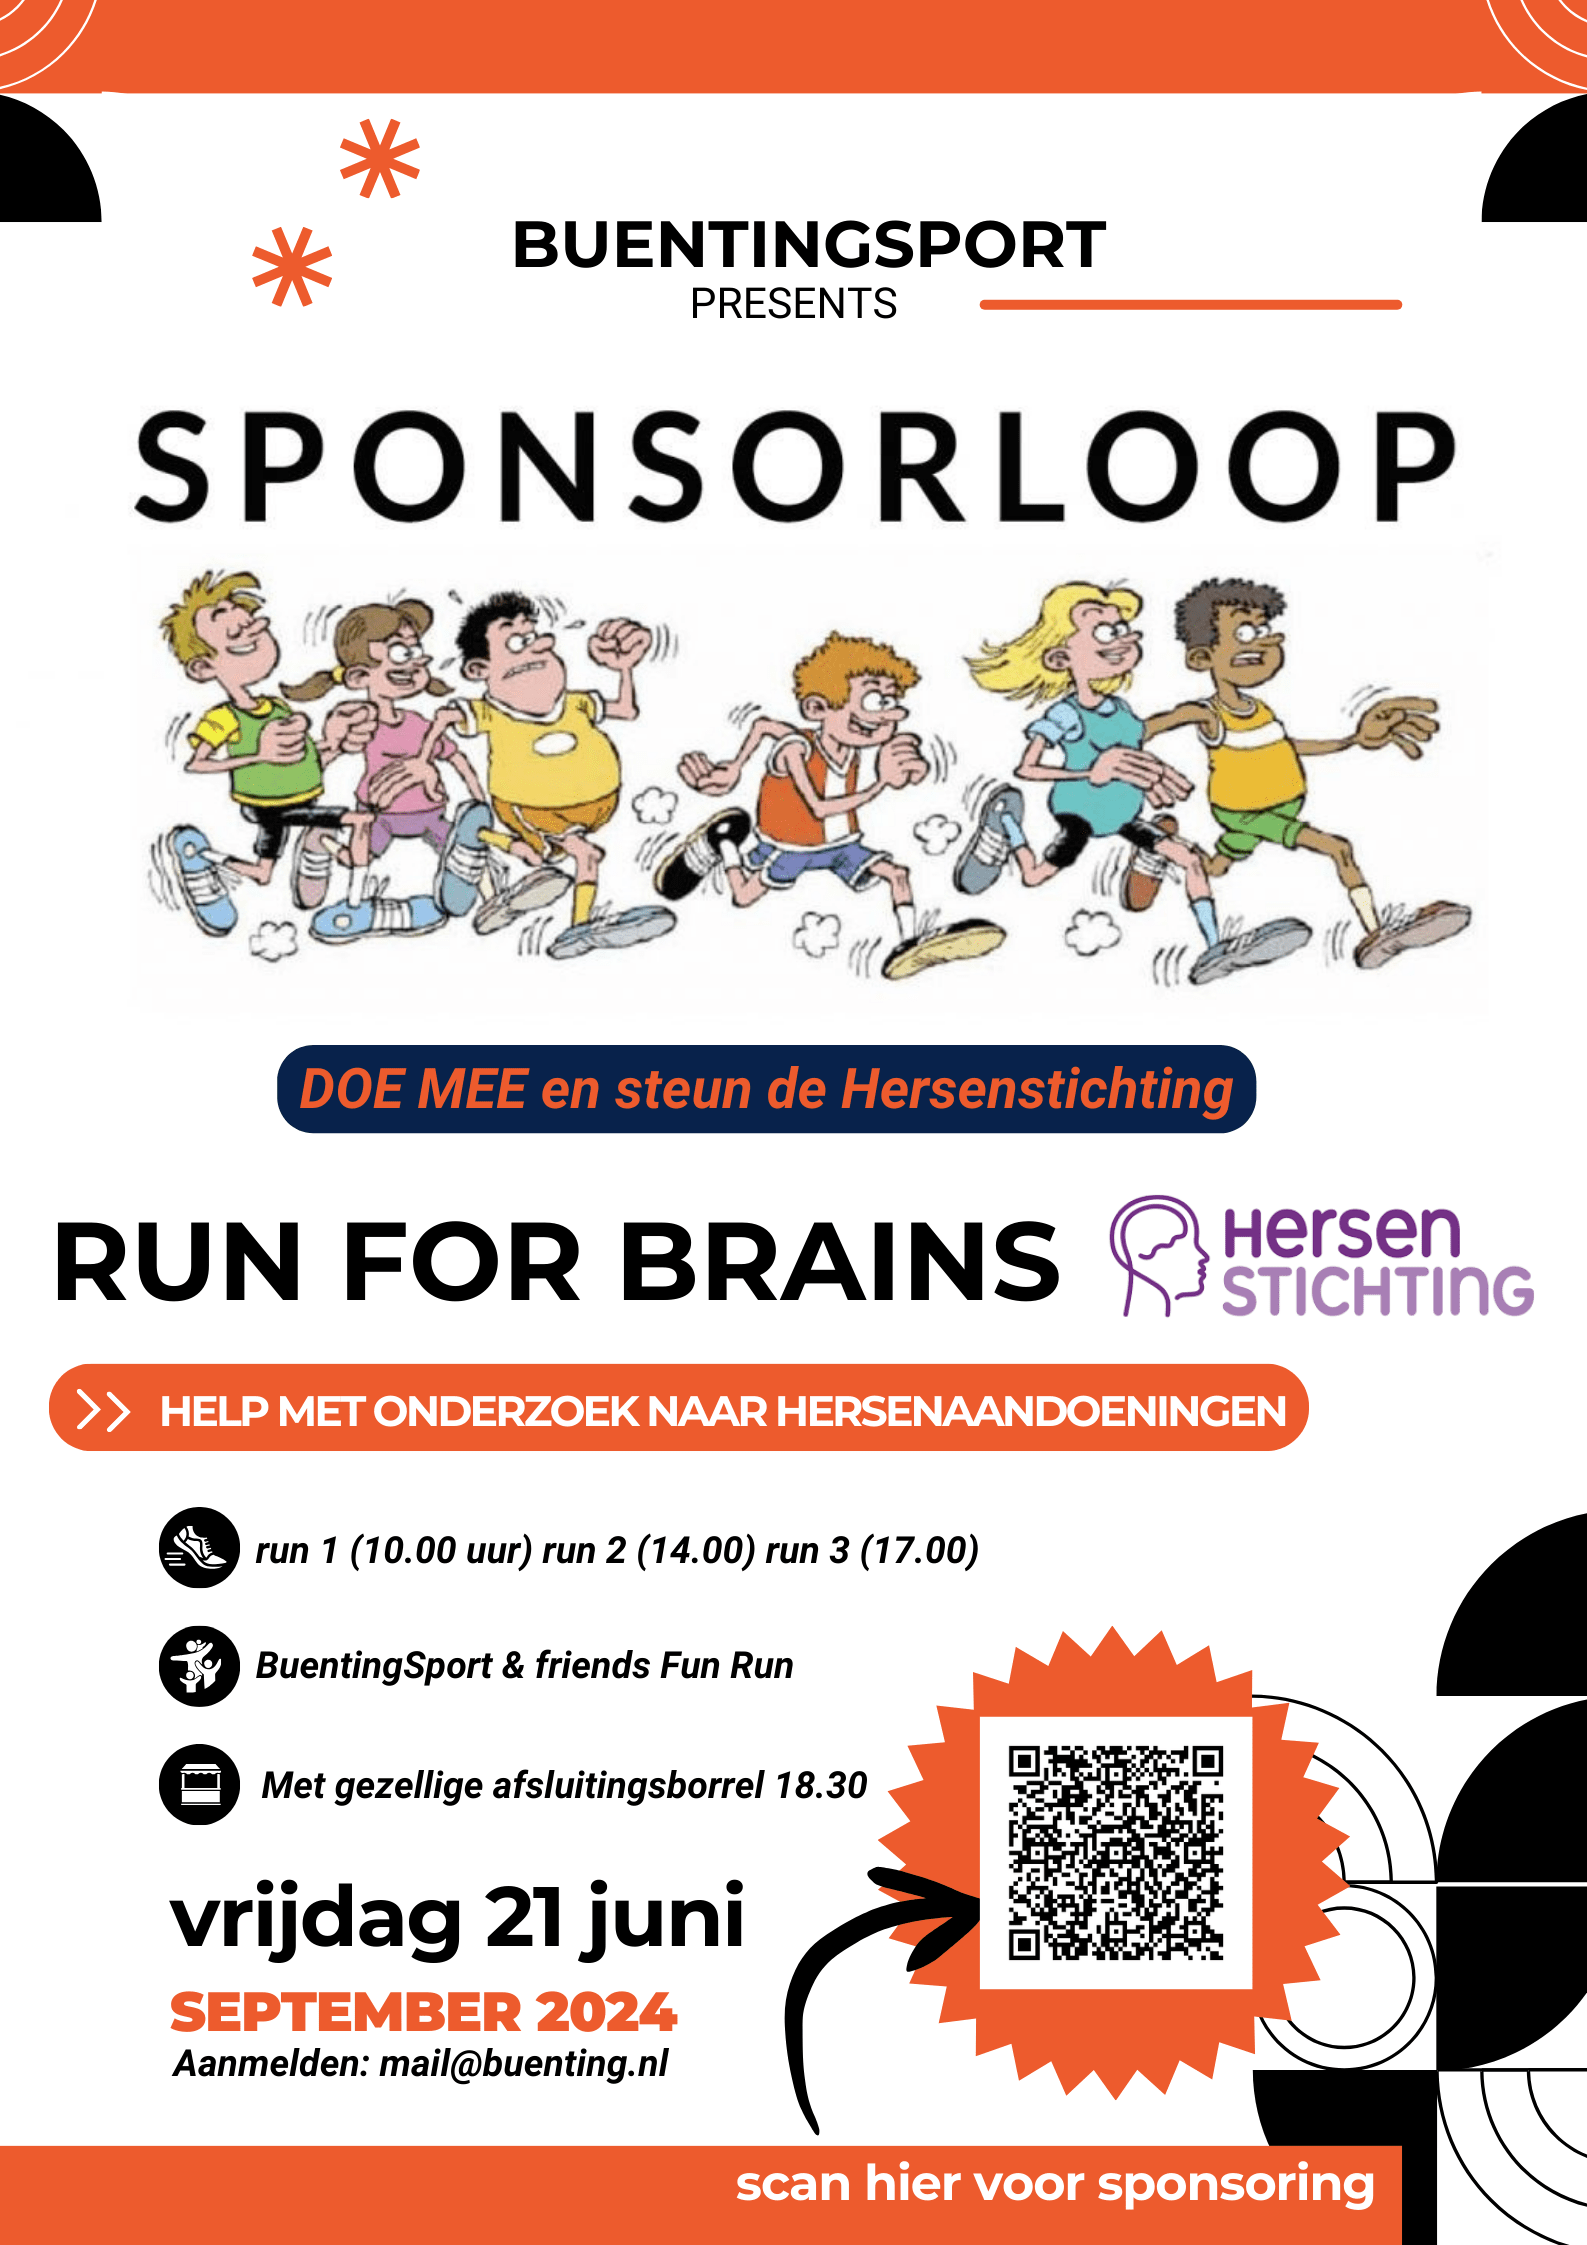 Sponsorloop Fun For Brains BuentingSport